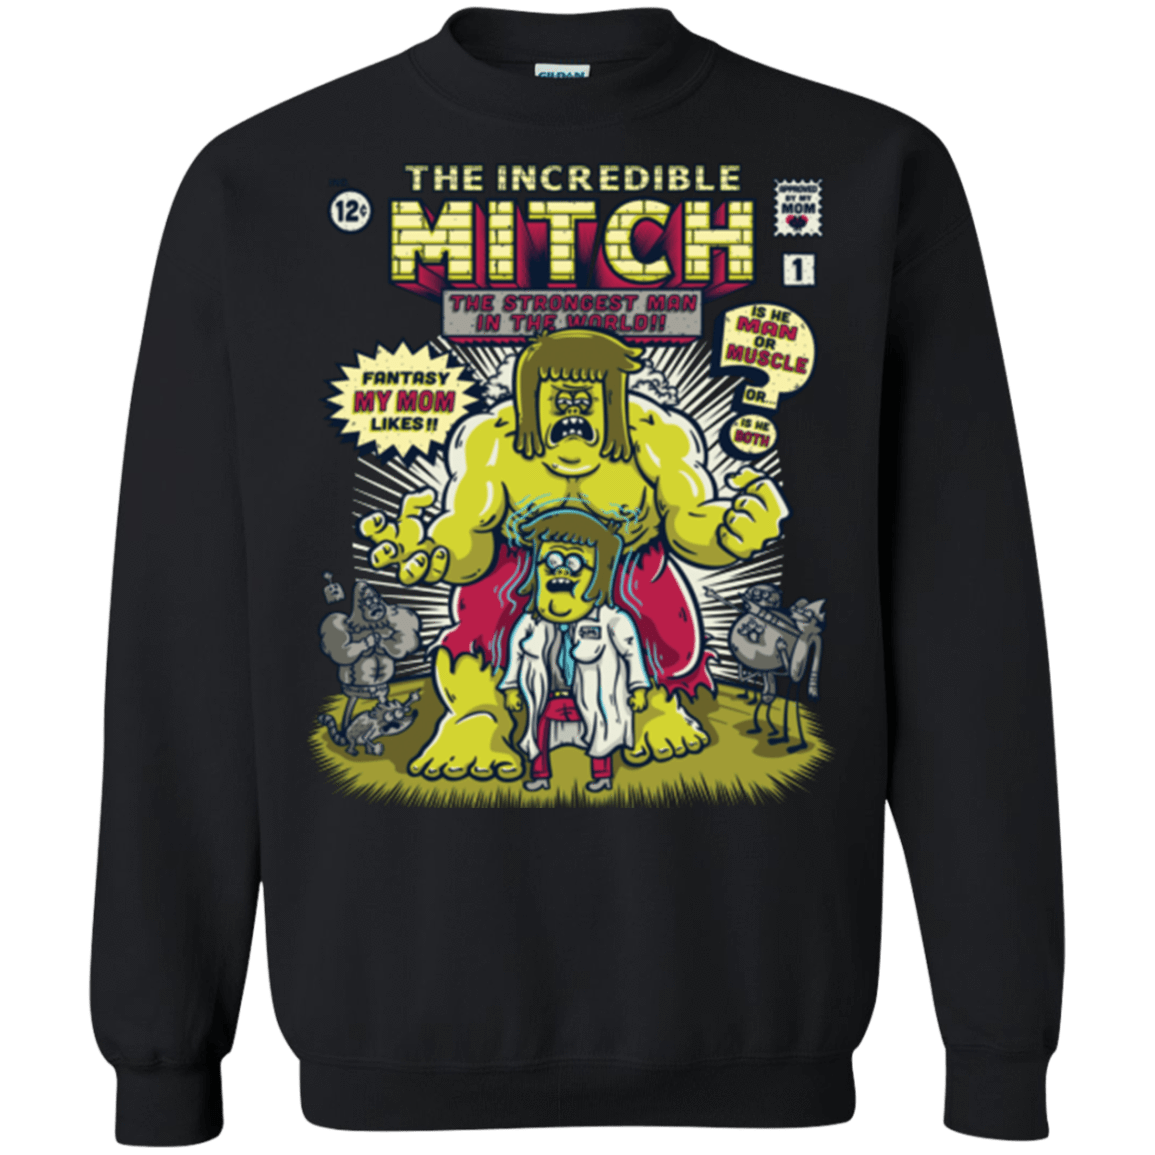 Sweatshirts Black / Small Incredible Mitch Crewneck Sweatshirt